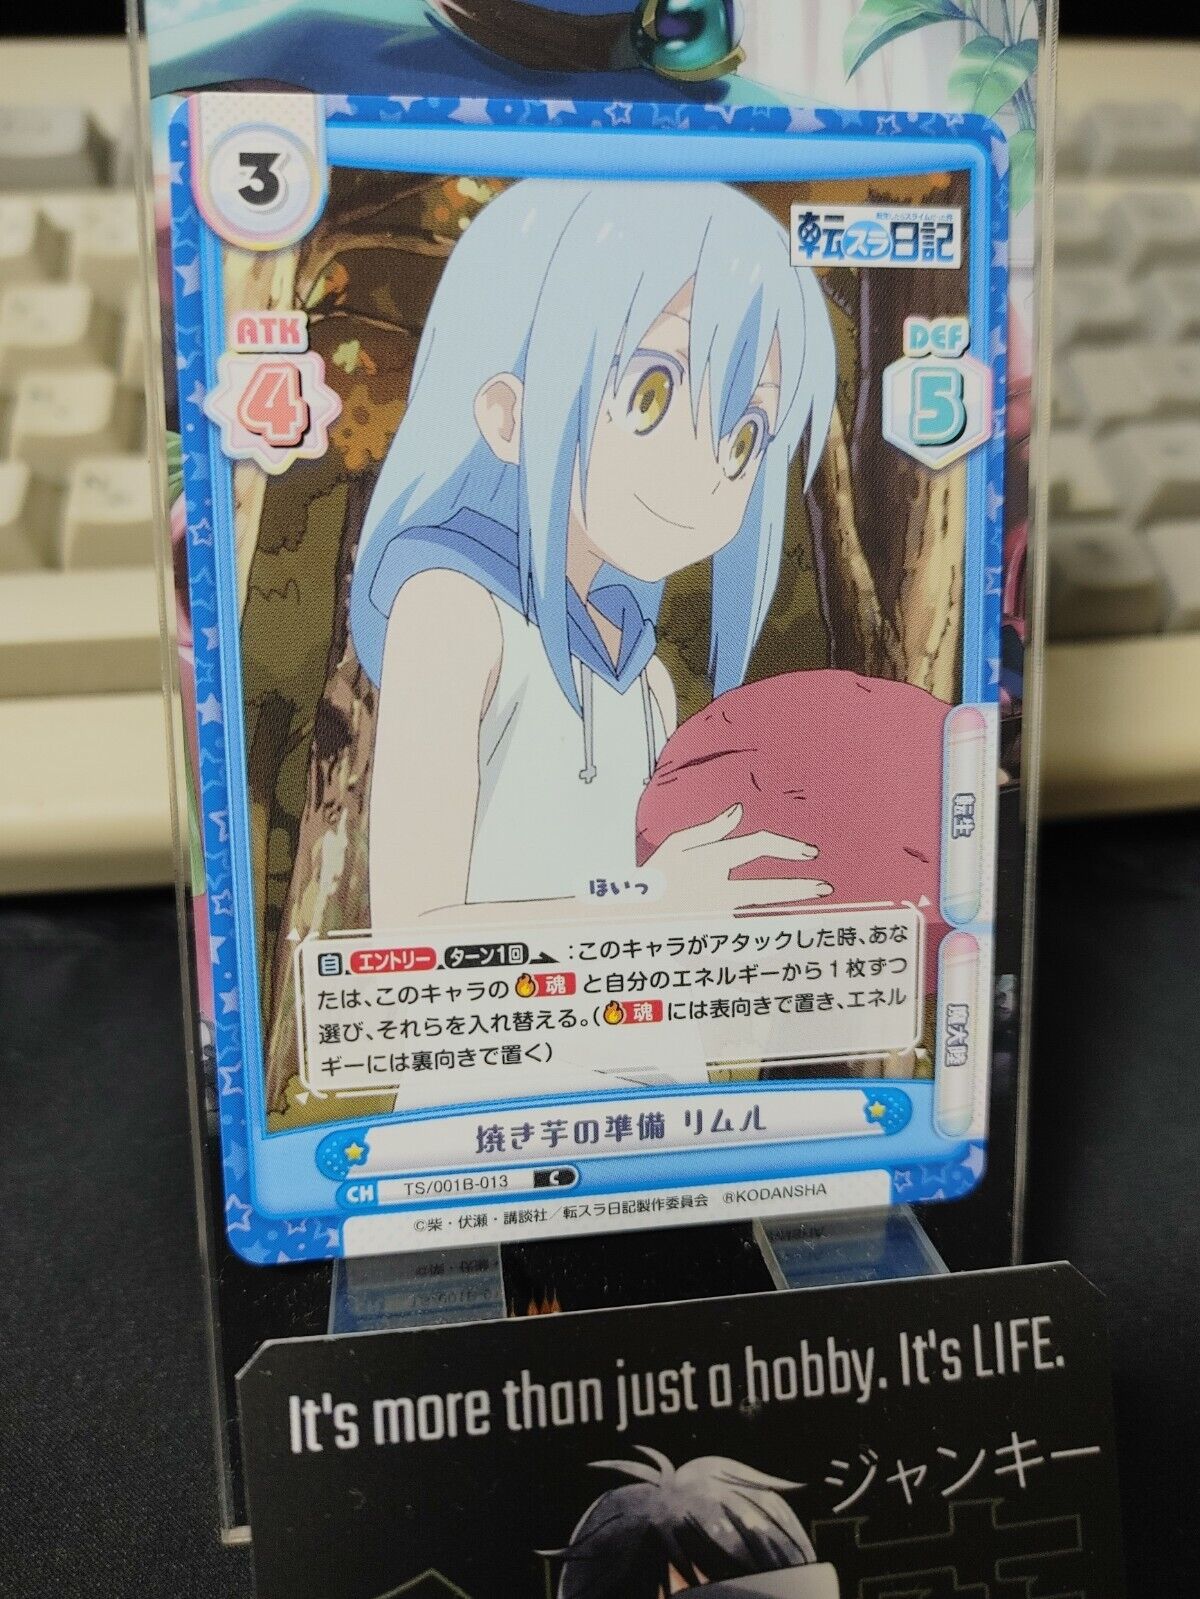 That Time I Got Reincarnated As A Slime Card Rimuru TS/001B-013 Japan